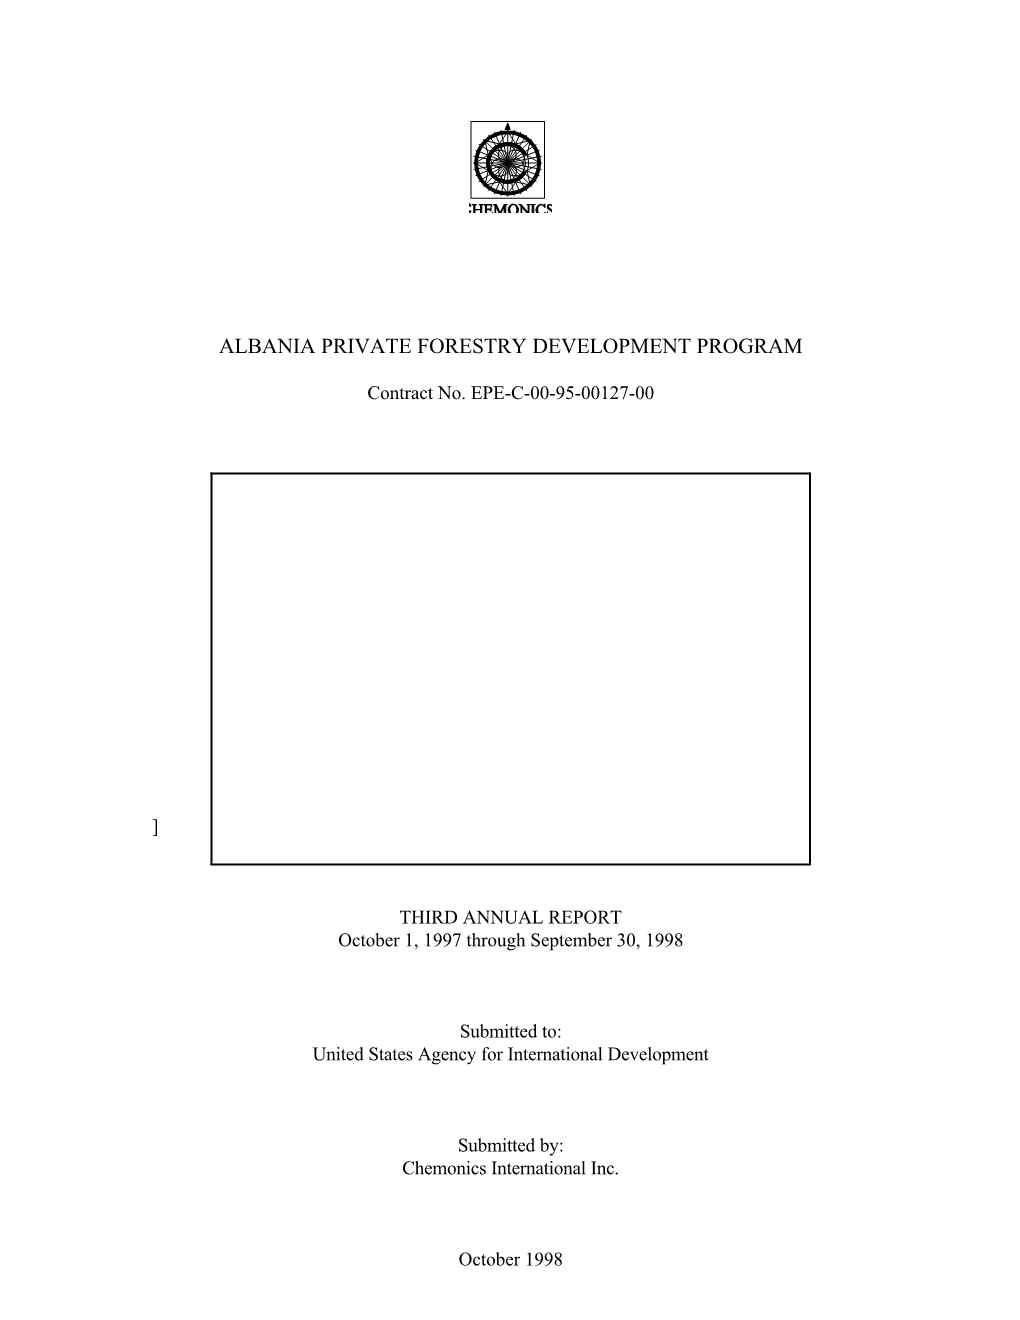 Albania Private Forestry Development Program